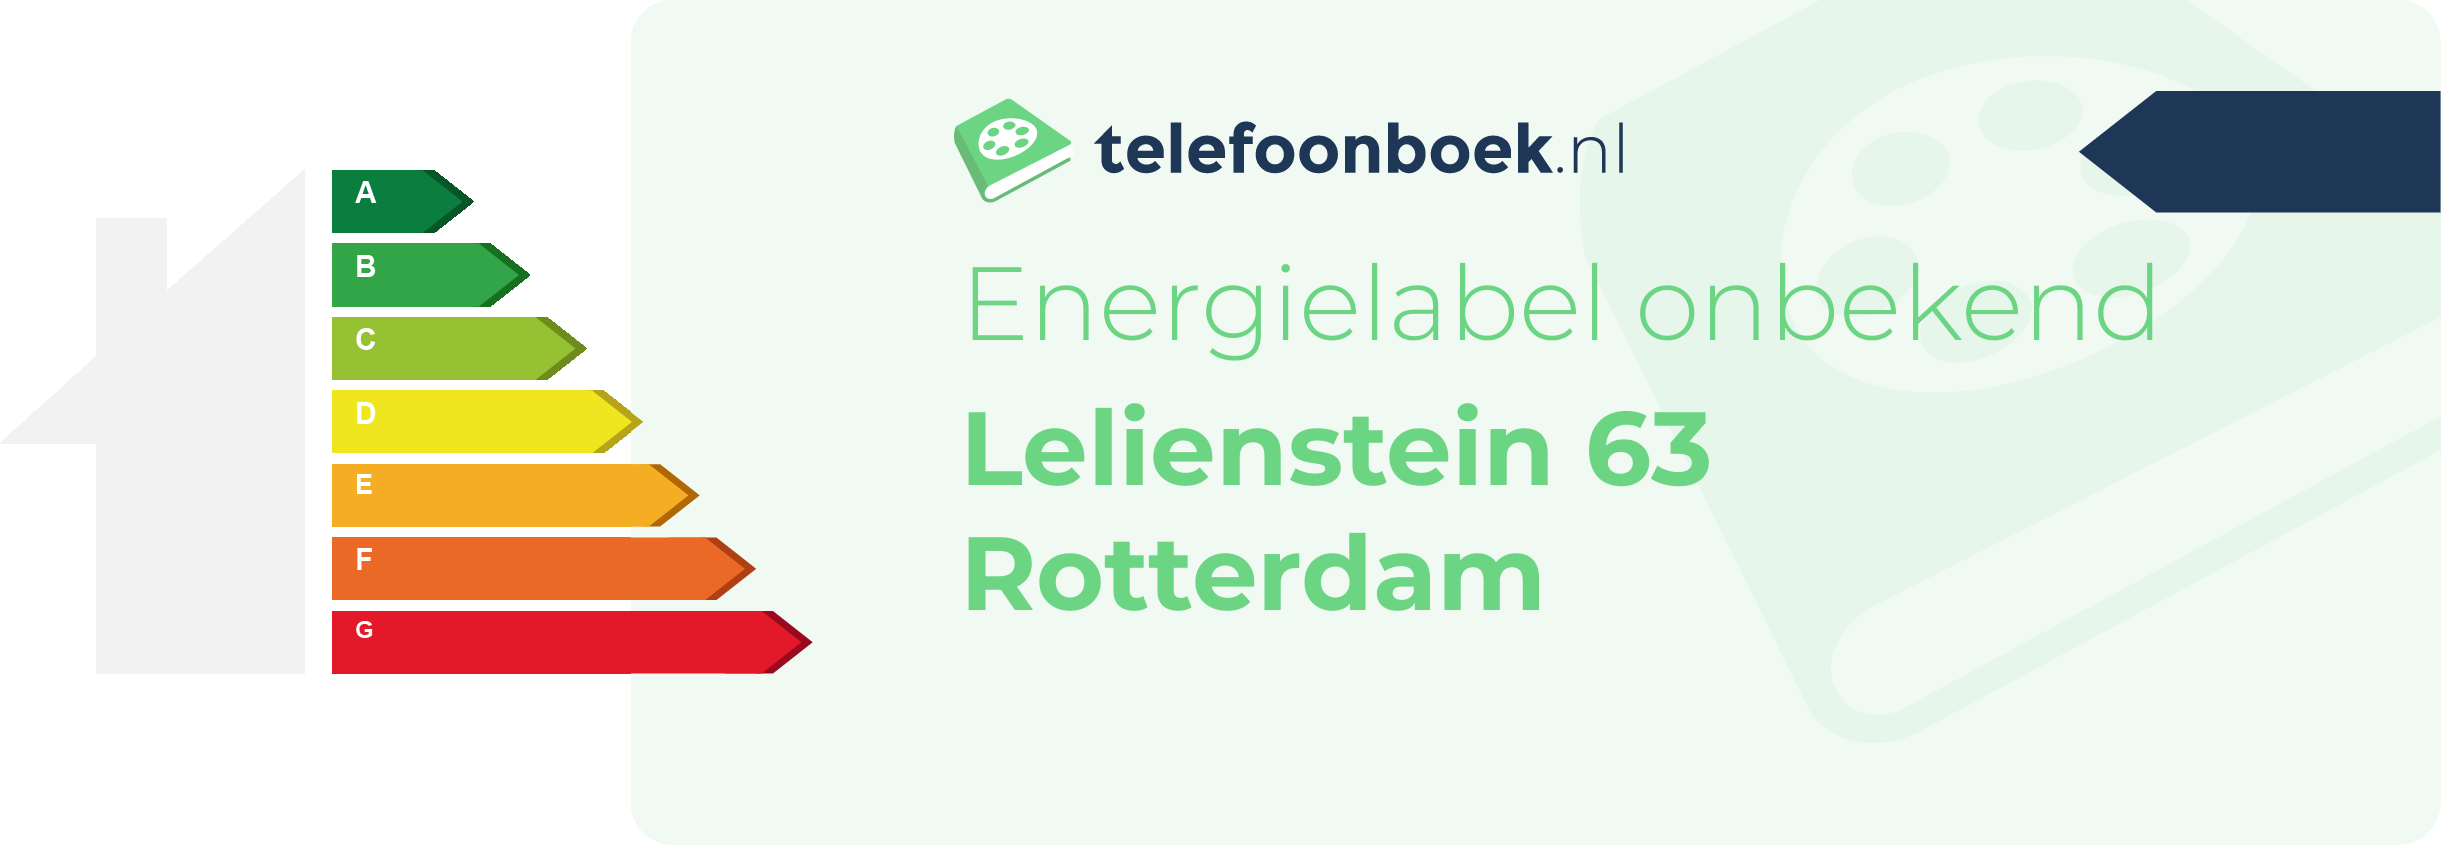 Energielabel Lelienstein 63 Rotterdam